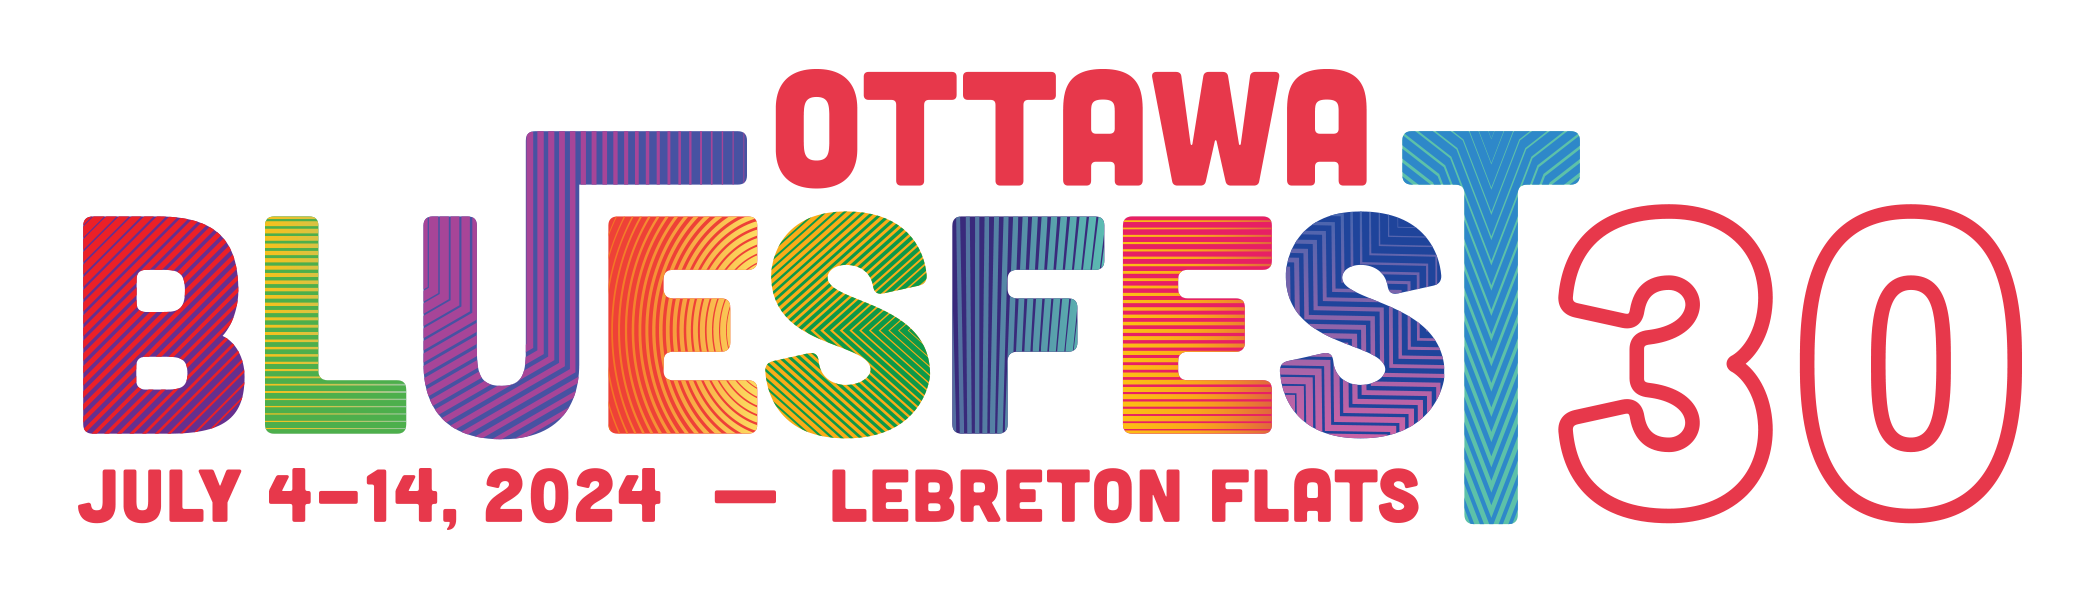 2024 Ottawa Bluesfest